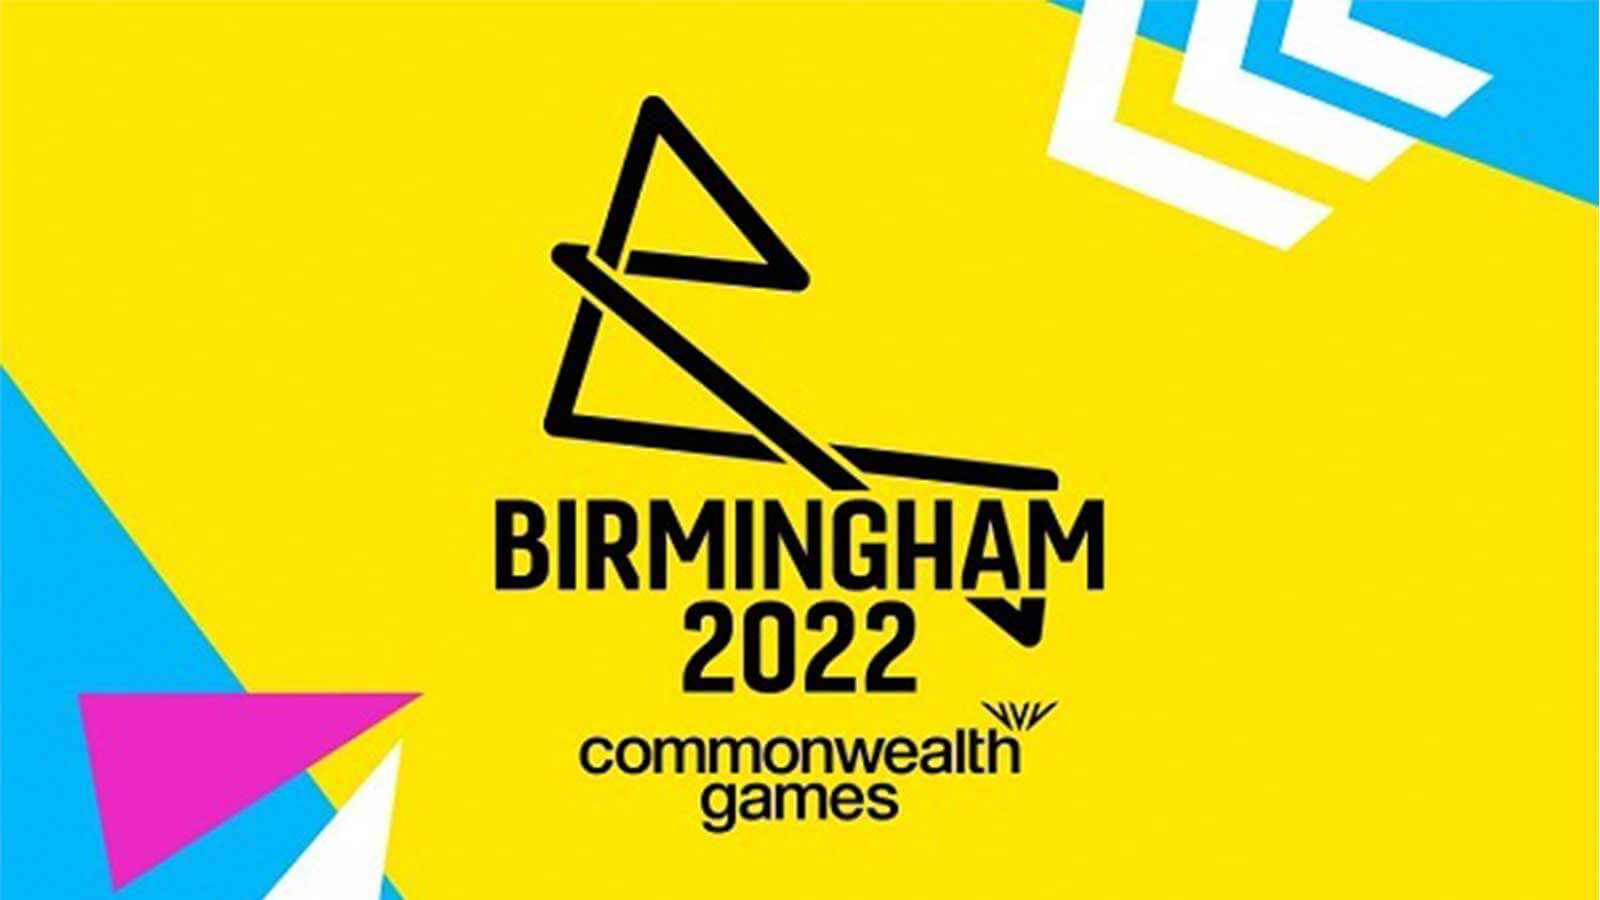 Commonwealth Games in Birmingham